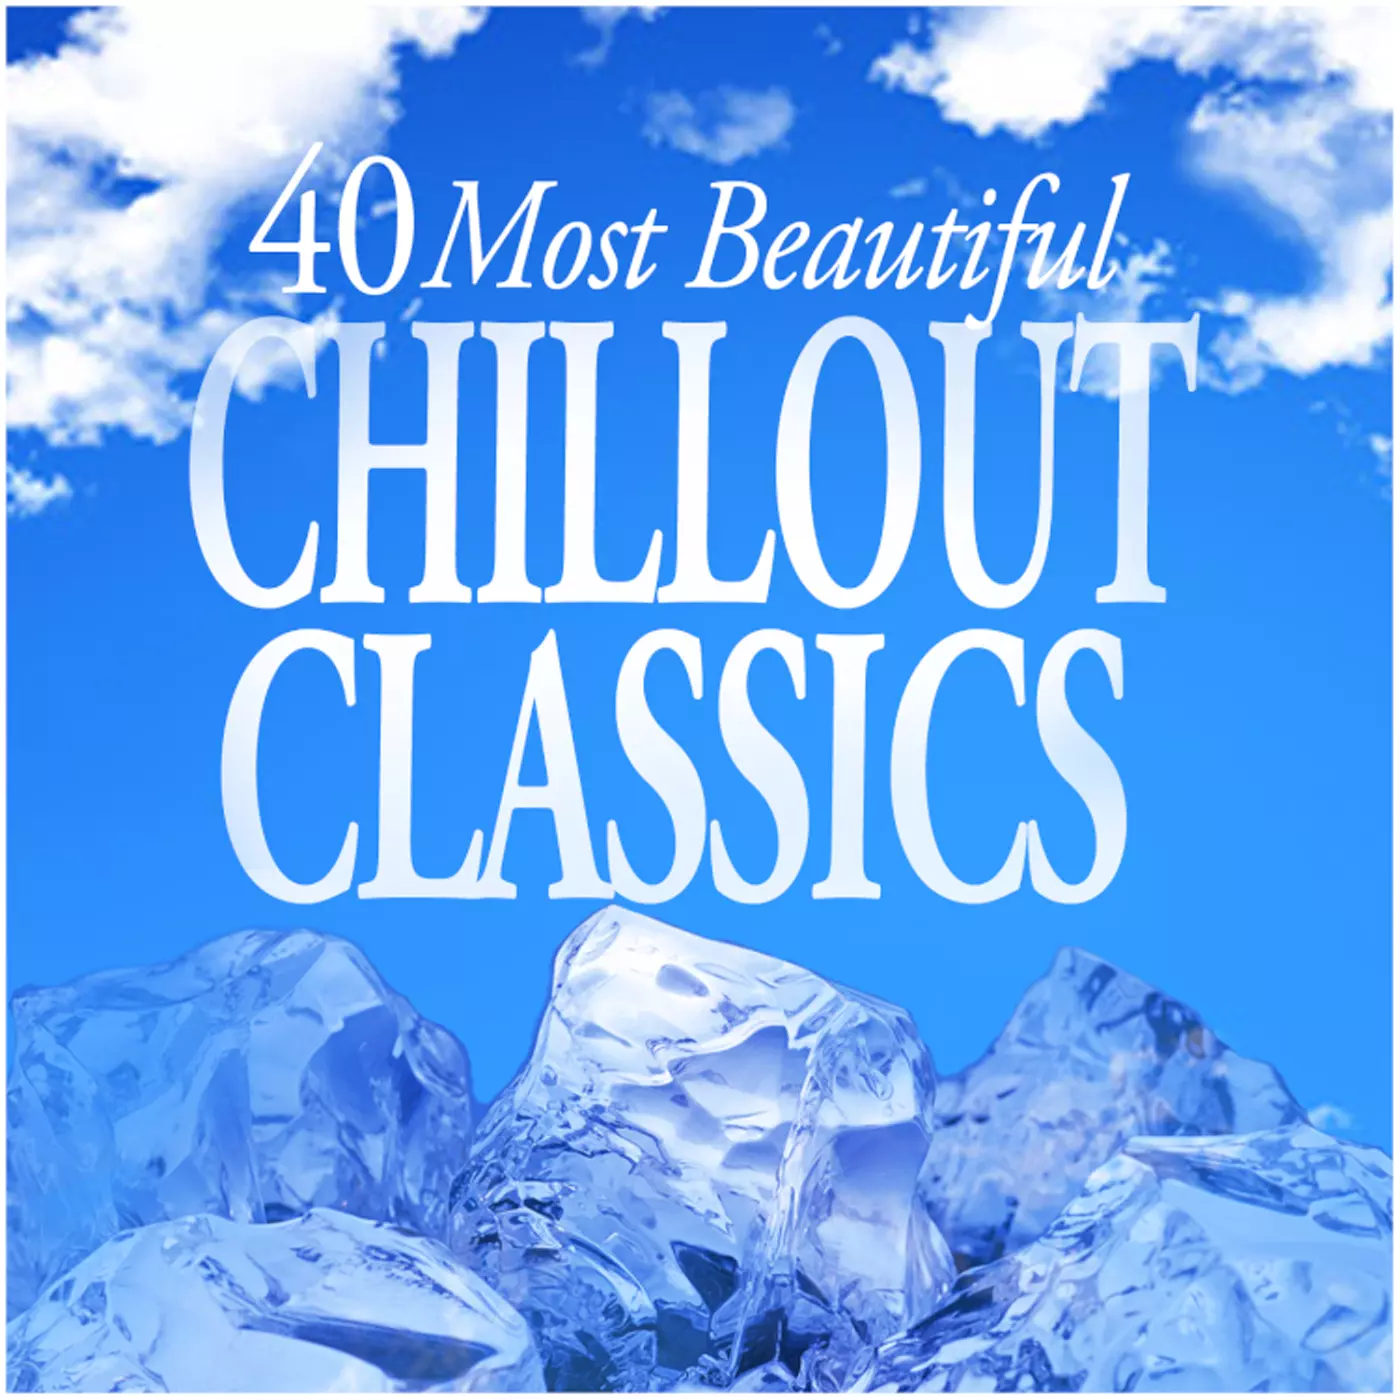 40 Most Beautiful Chillout Classics